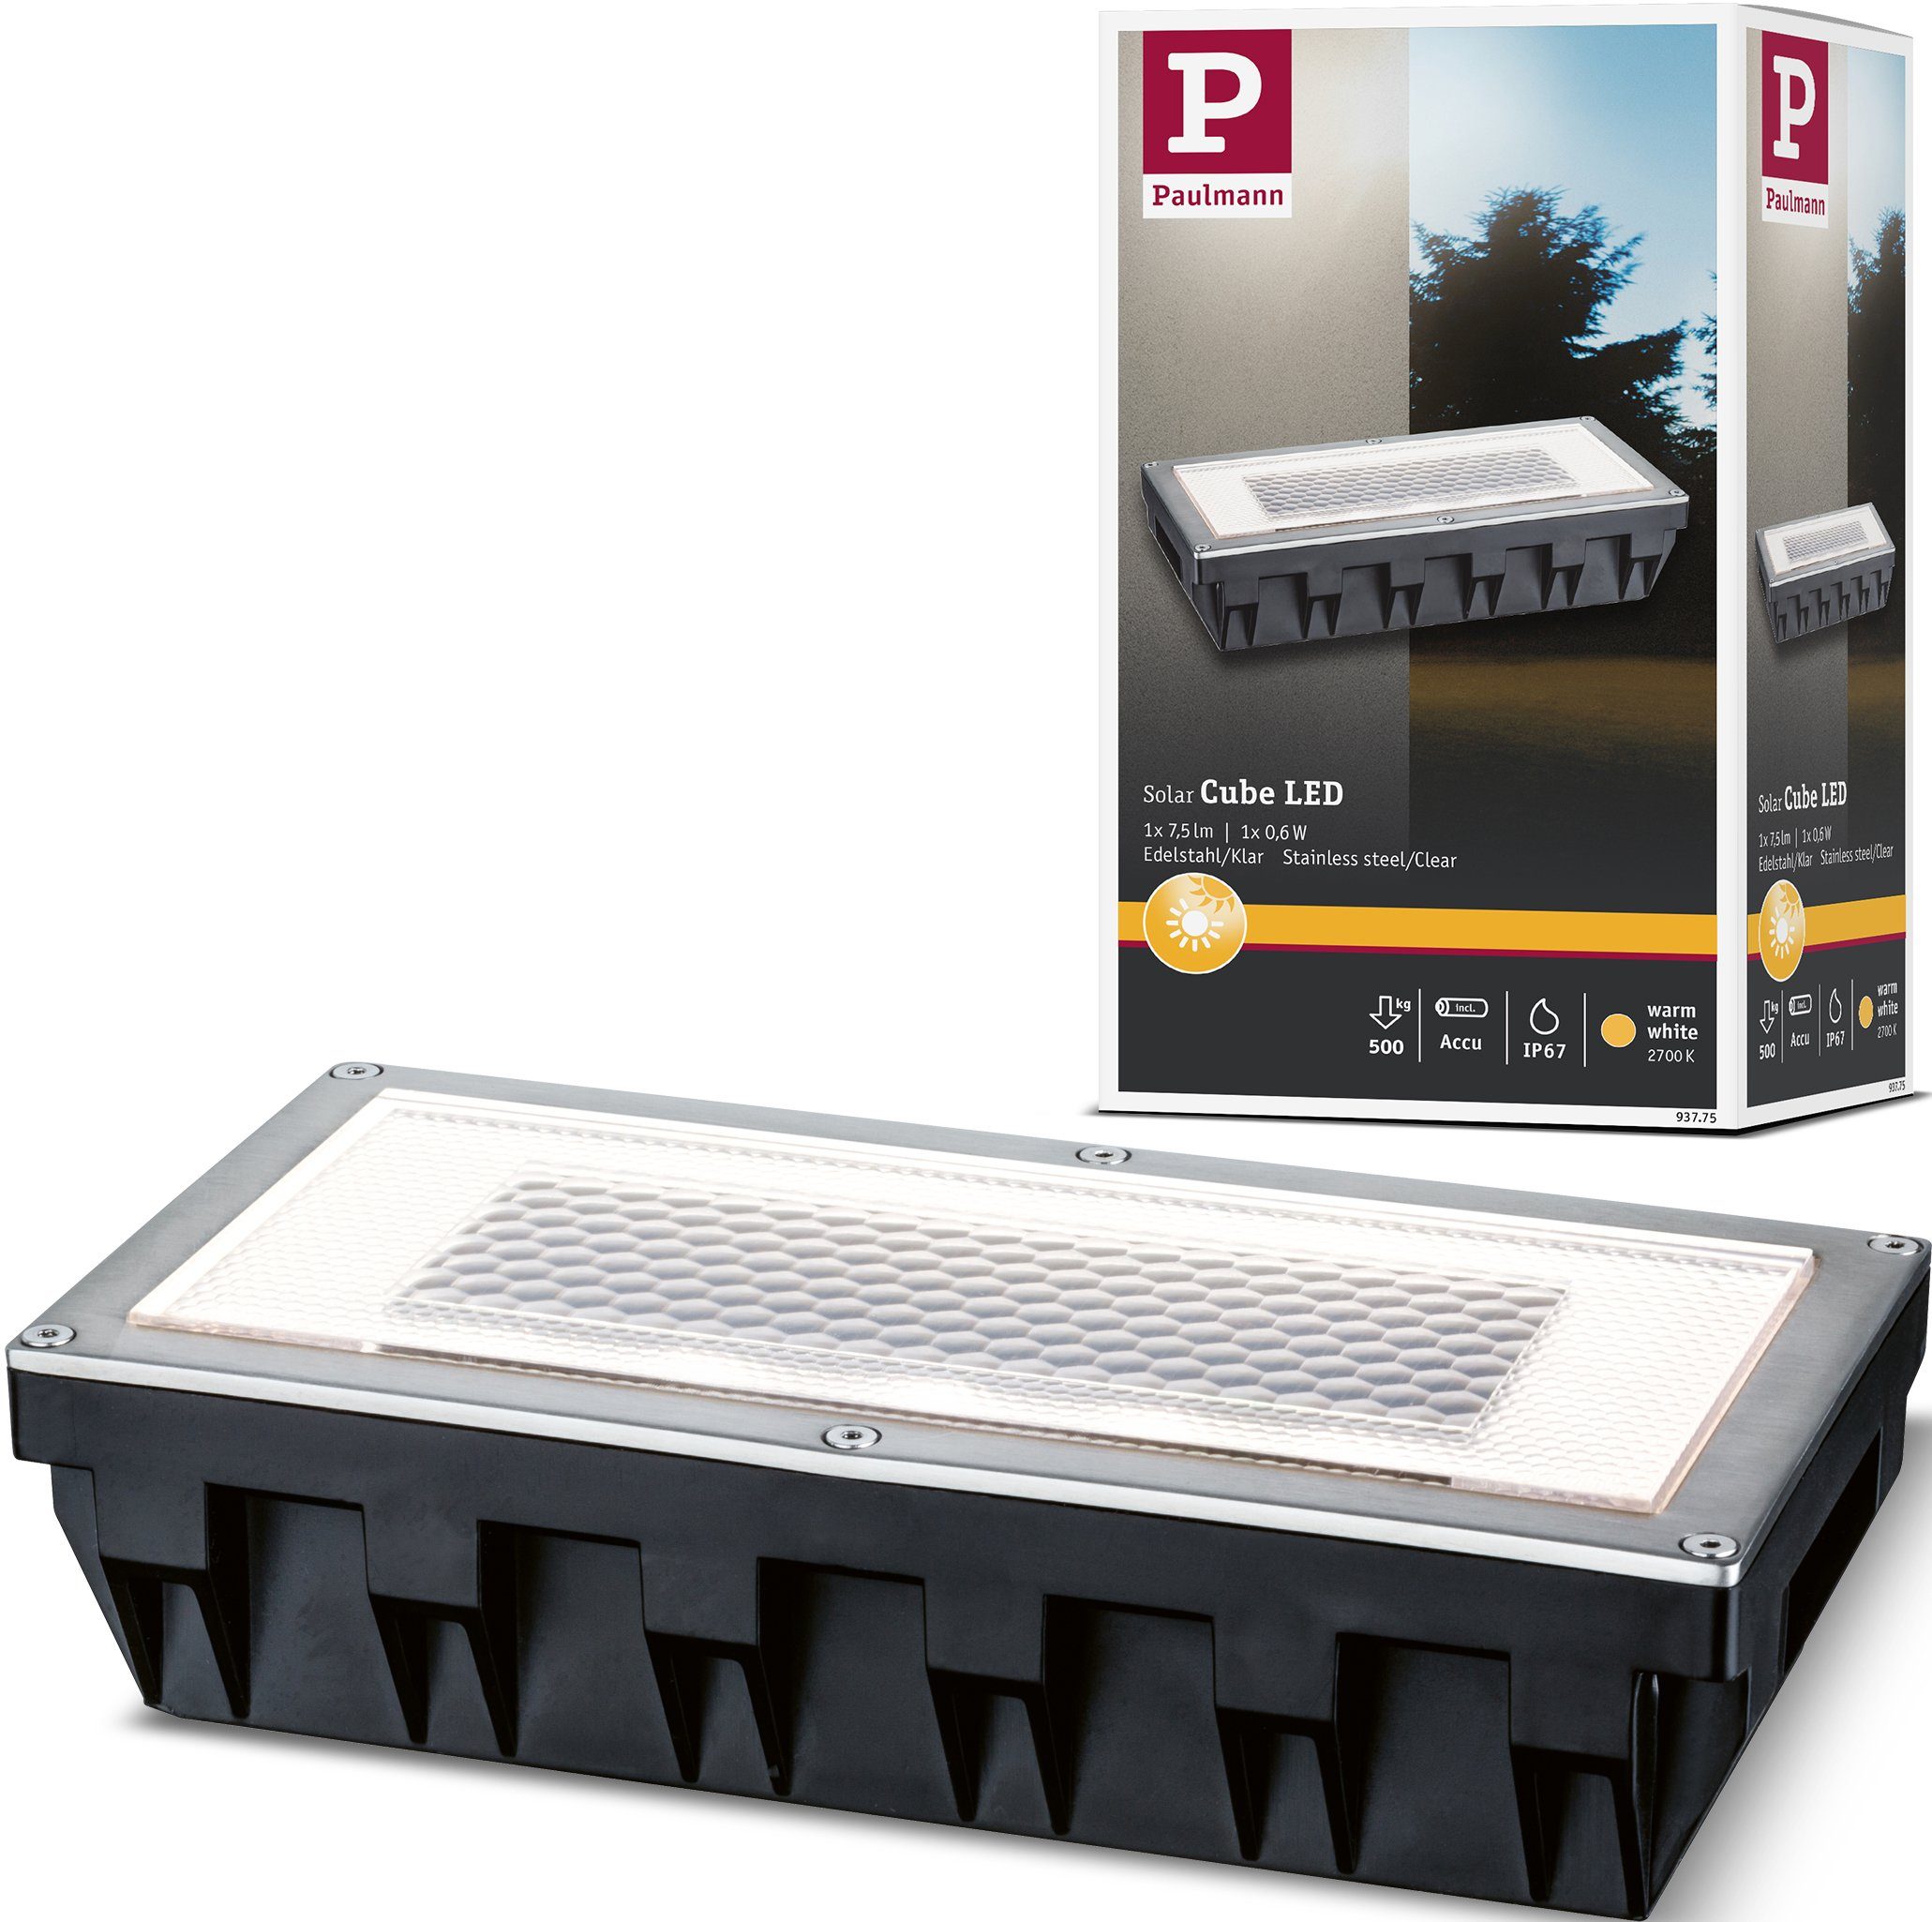 Einbauleuchte Box, LED Edelstahl Bodeneinbauleuchten-Set, LED LED-Board, Warmweiß, Paulmann integriert, Solar, fest